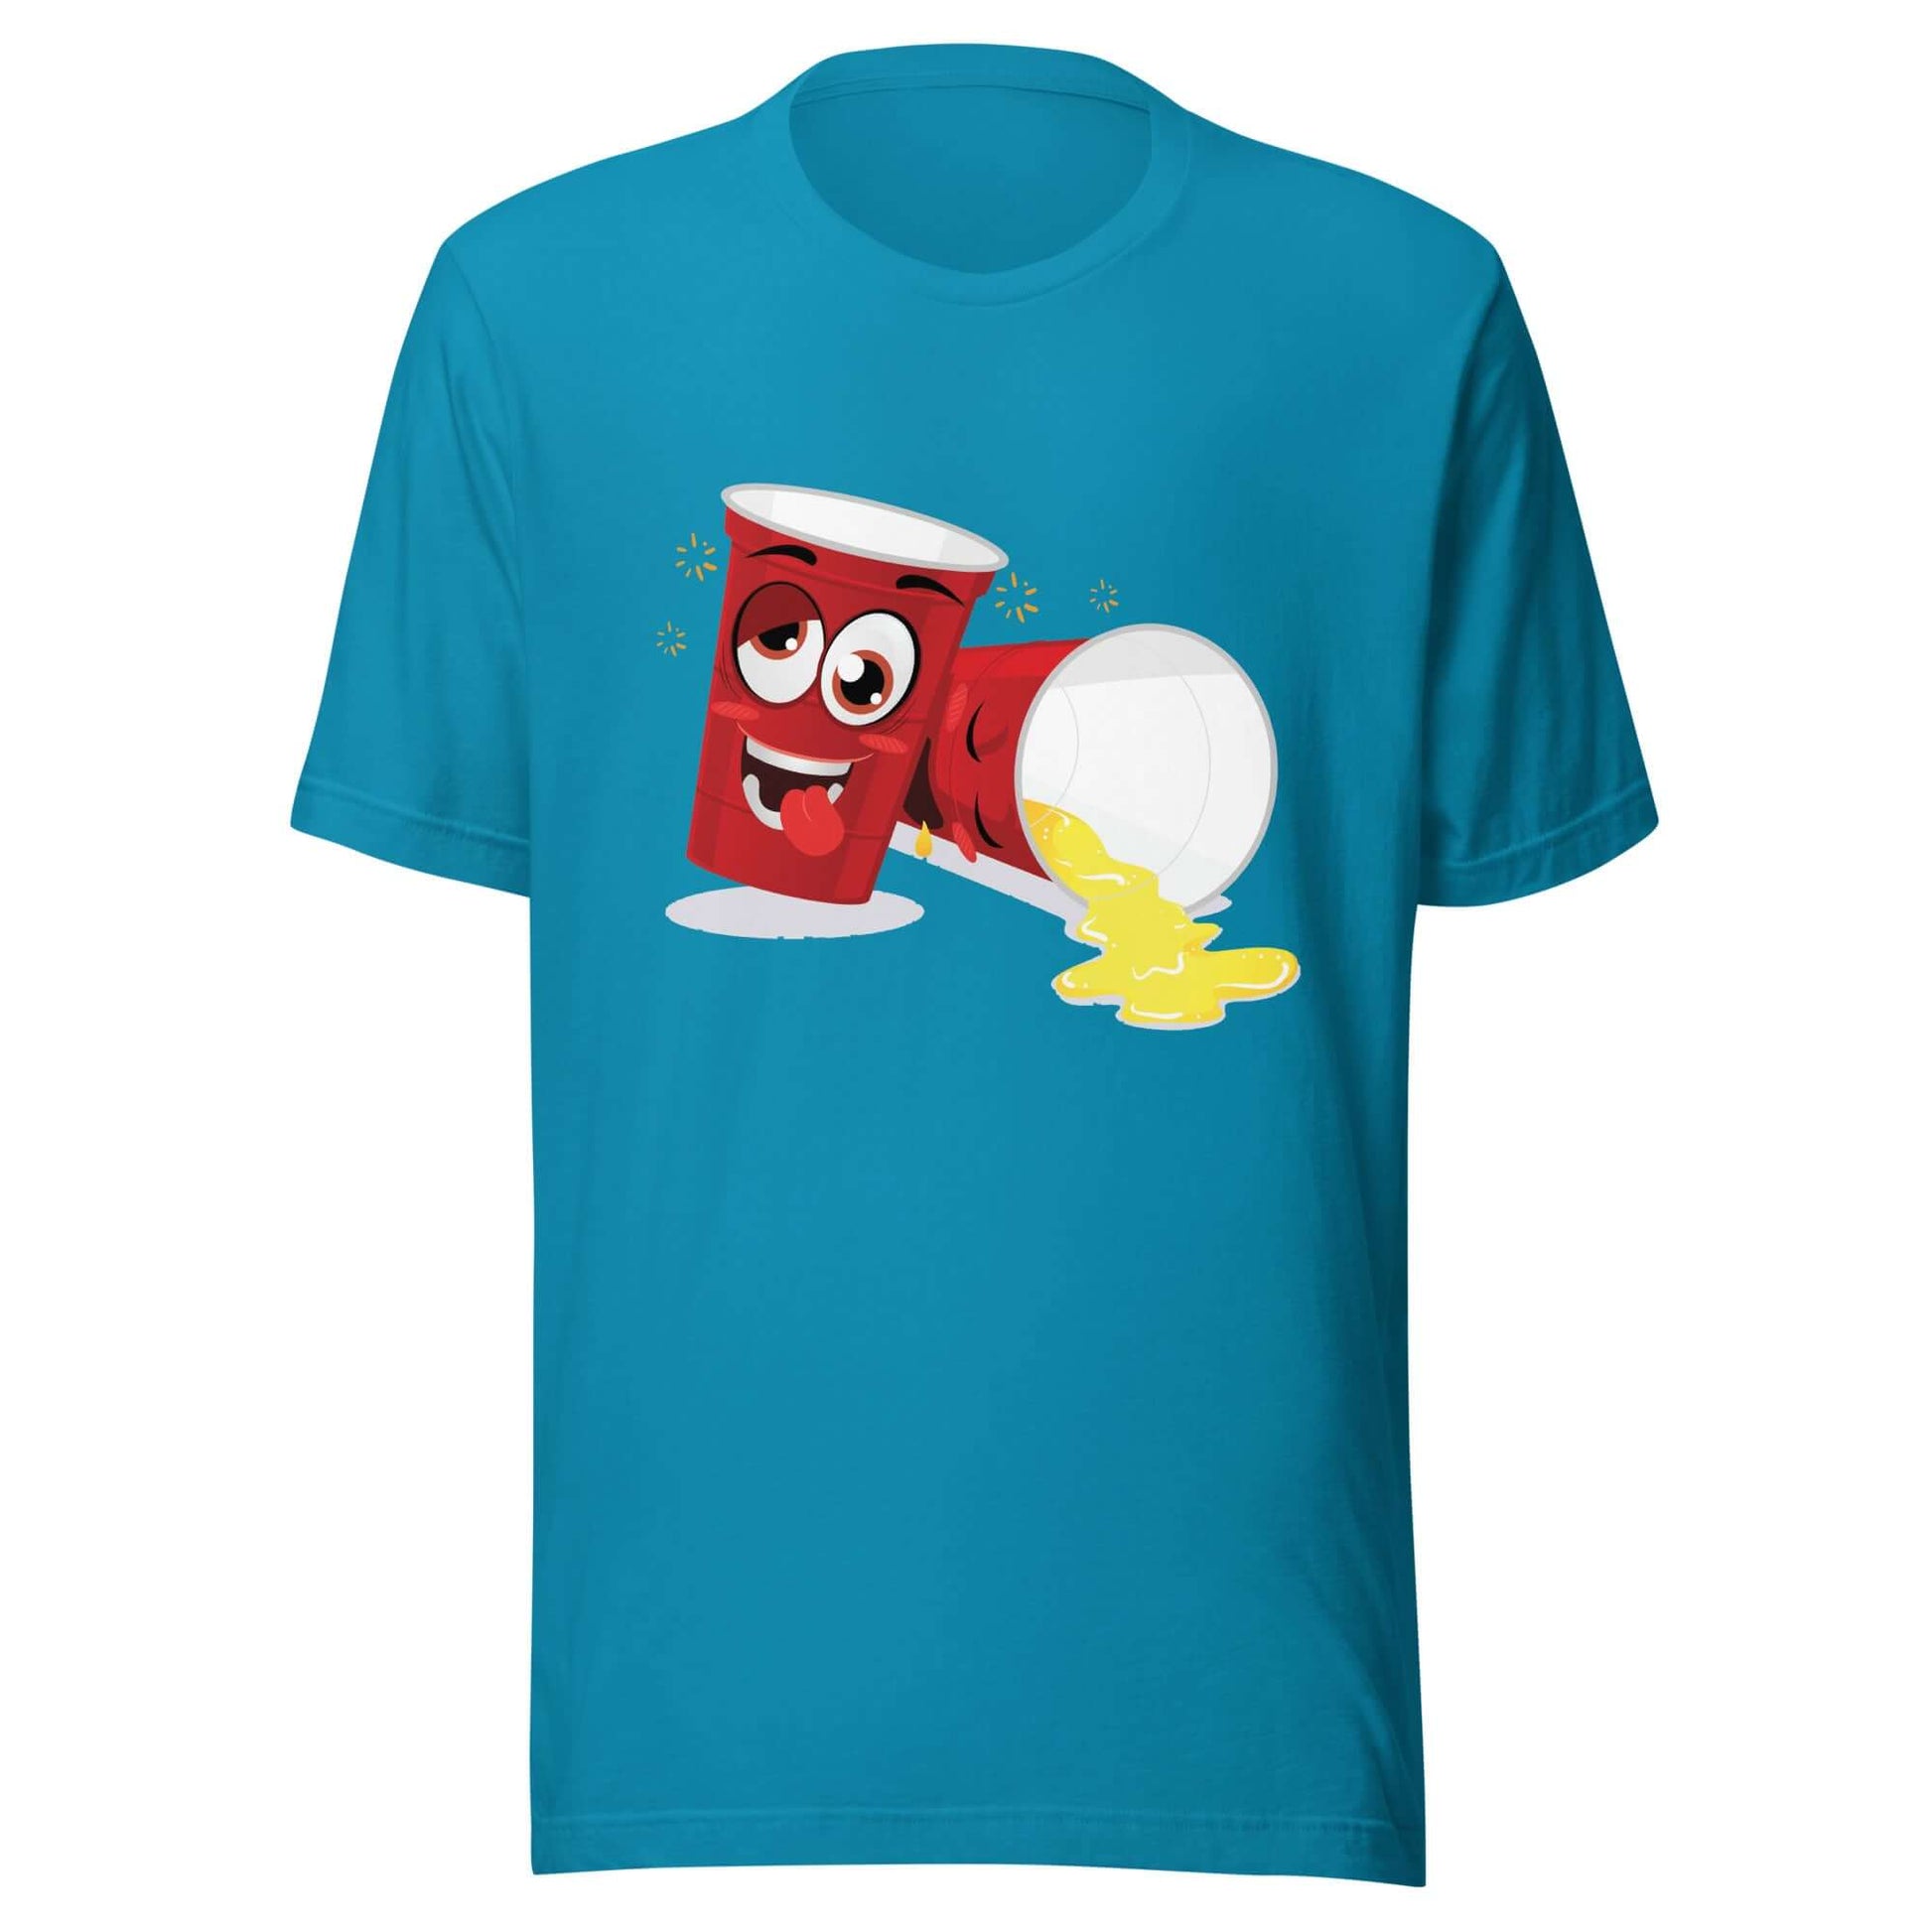 Beer Pong Cups Drunk - Unisex t-shirt - Blue